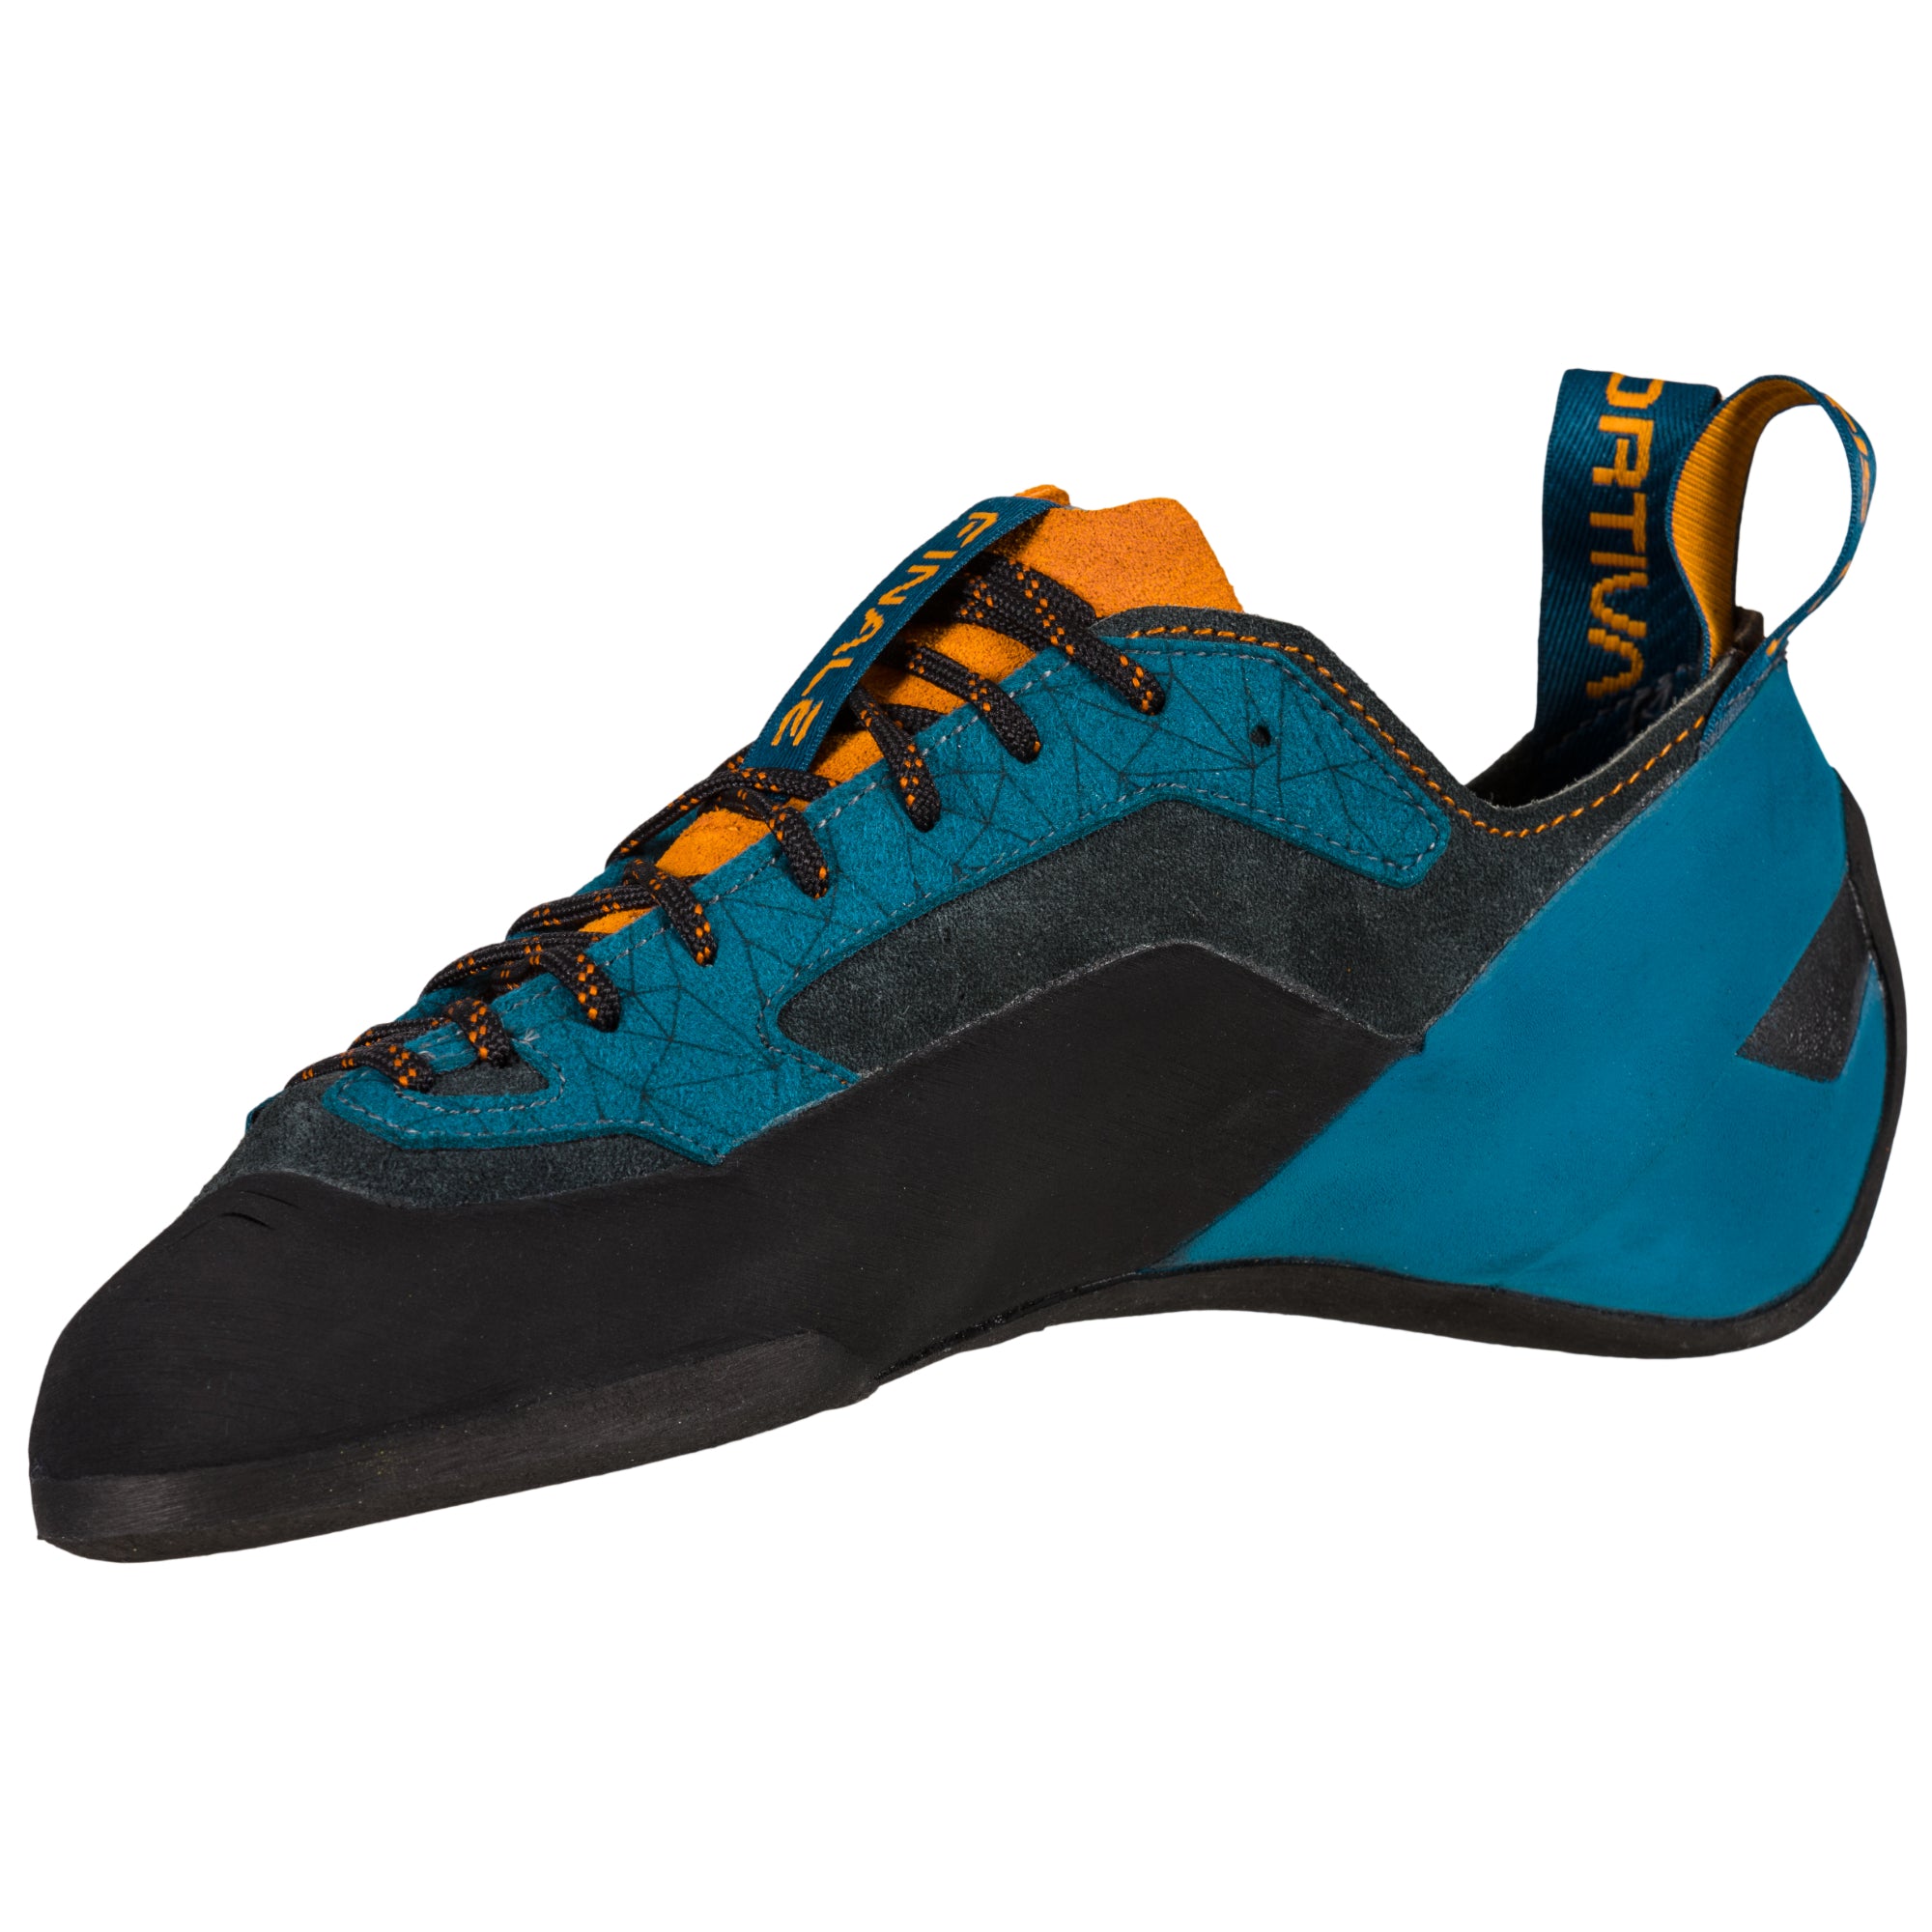 La Sportiva Finale Climbing Shoes | Buy now at Rock+Run